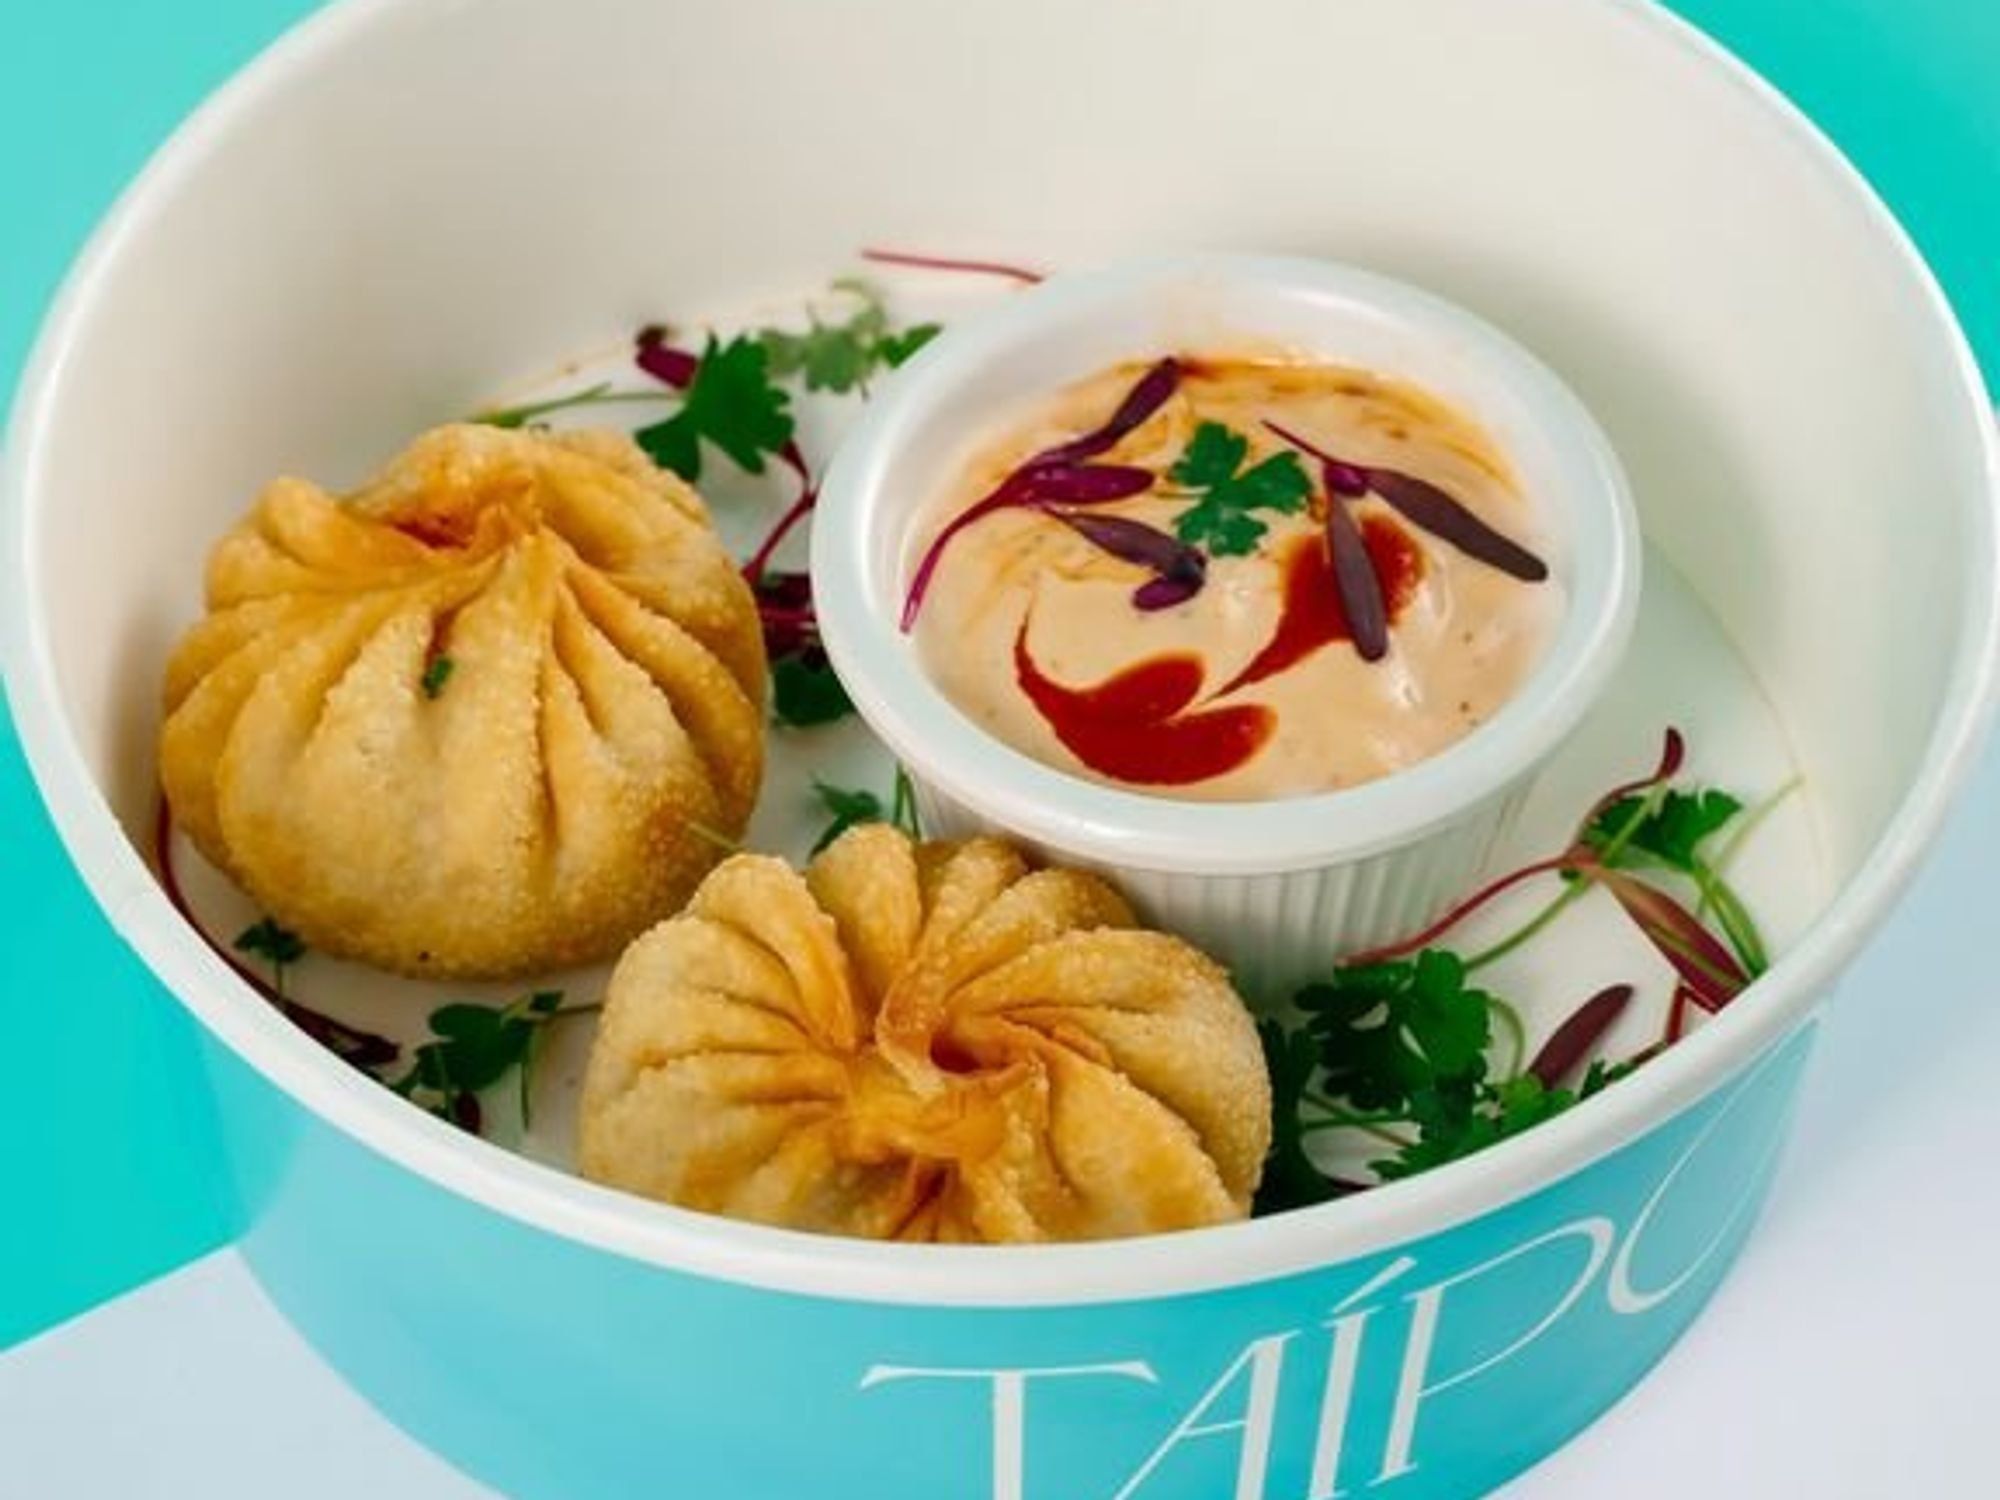 Taipo dumplings